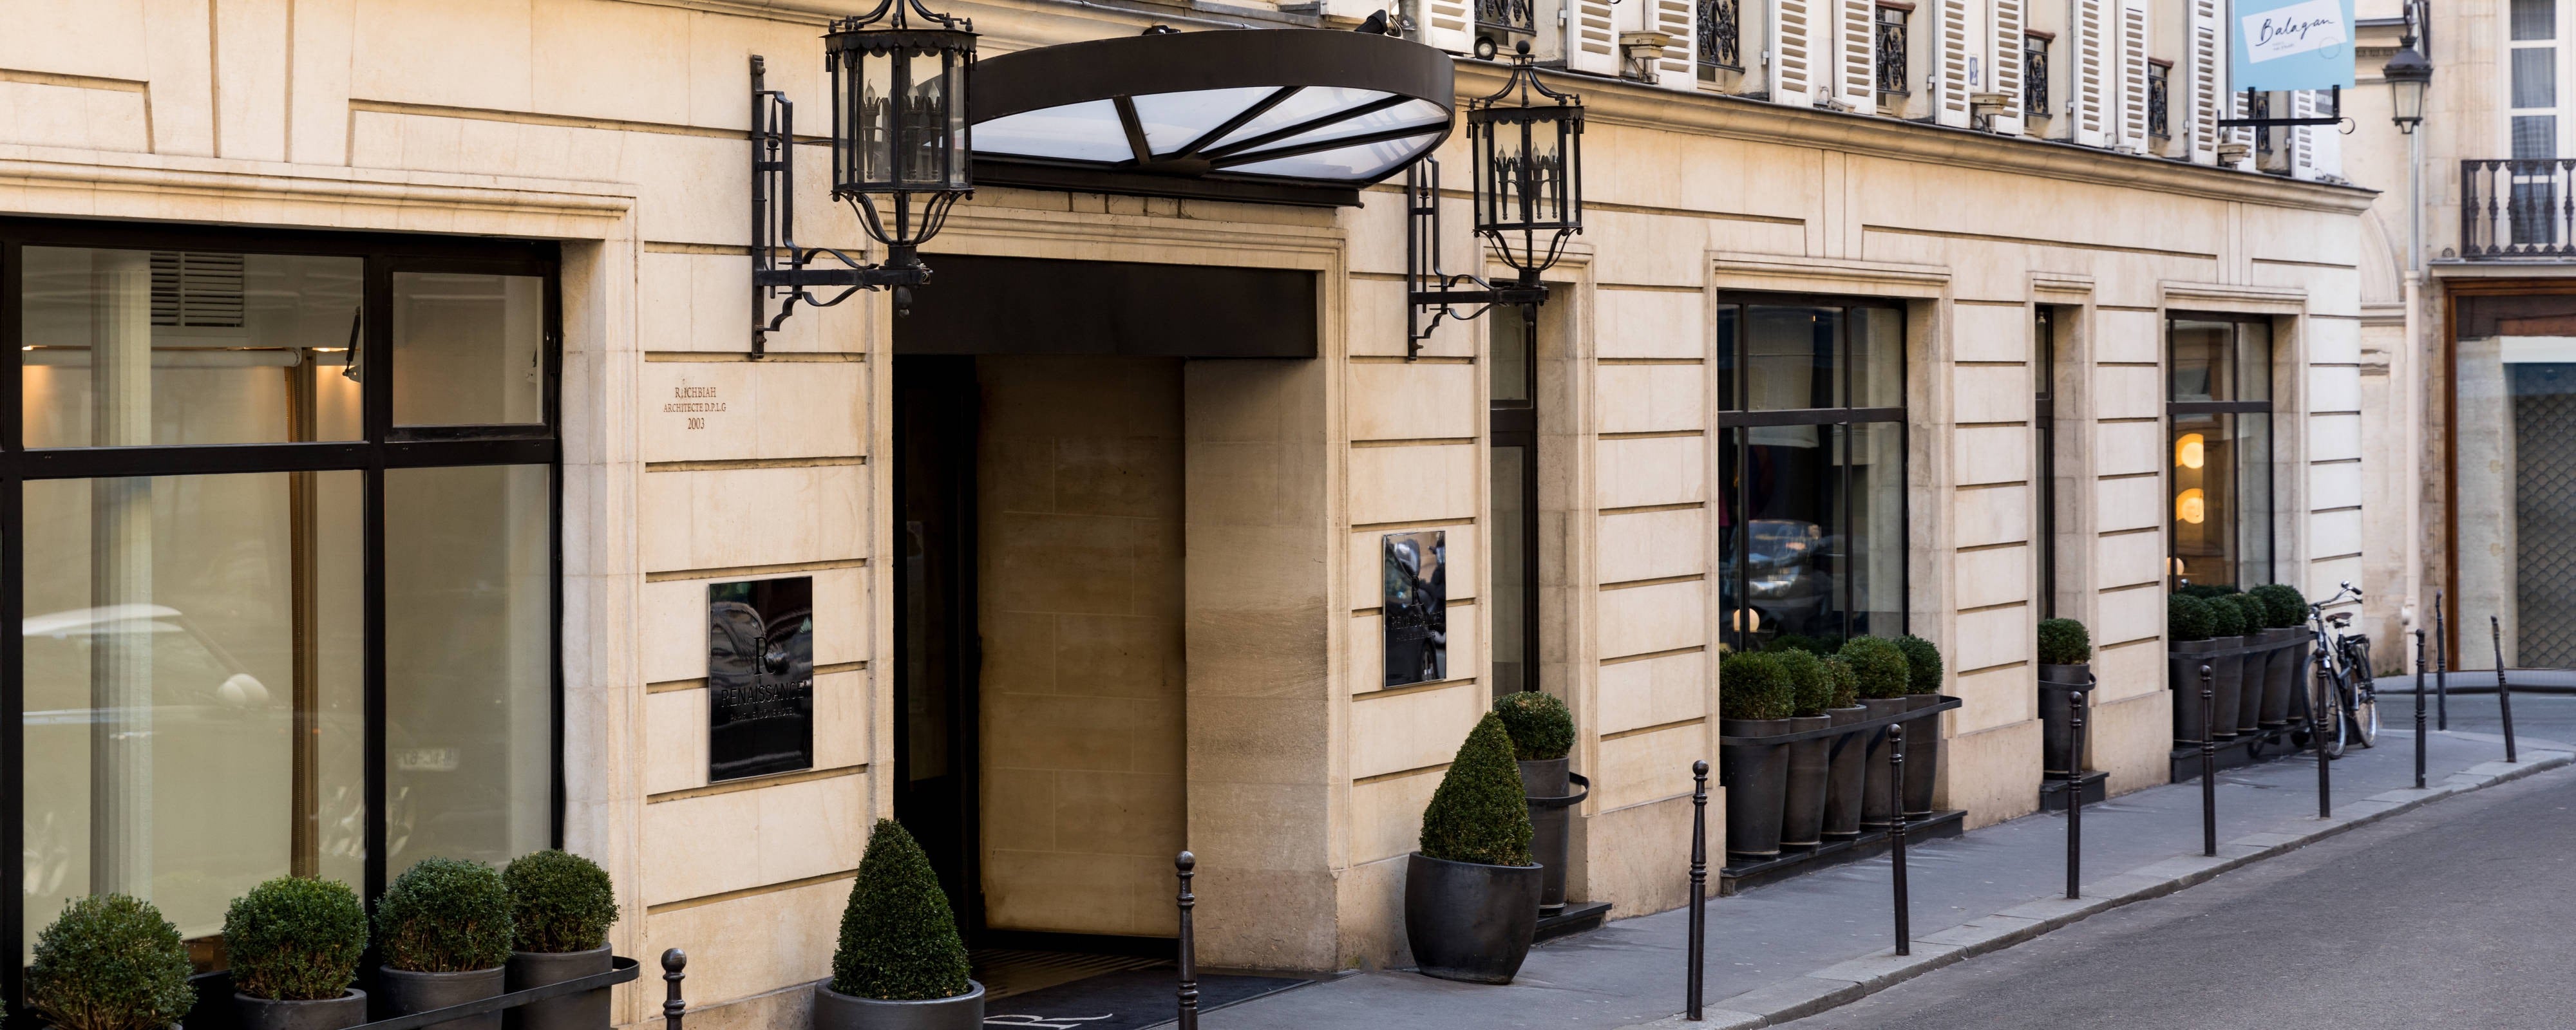 Paris Hotel near Opera Metro Station | Renaissance Paris Vendome Hotel